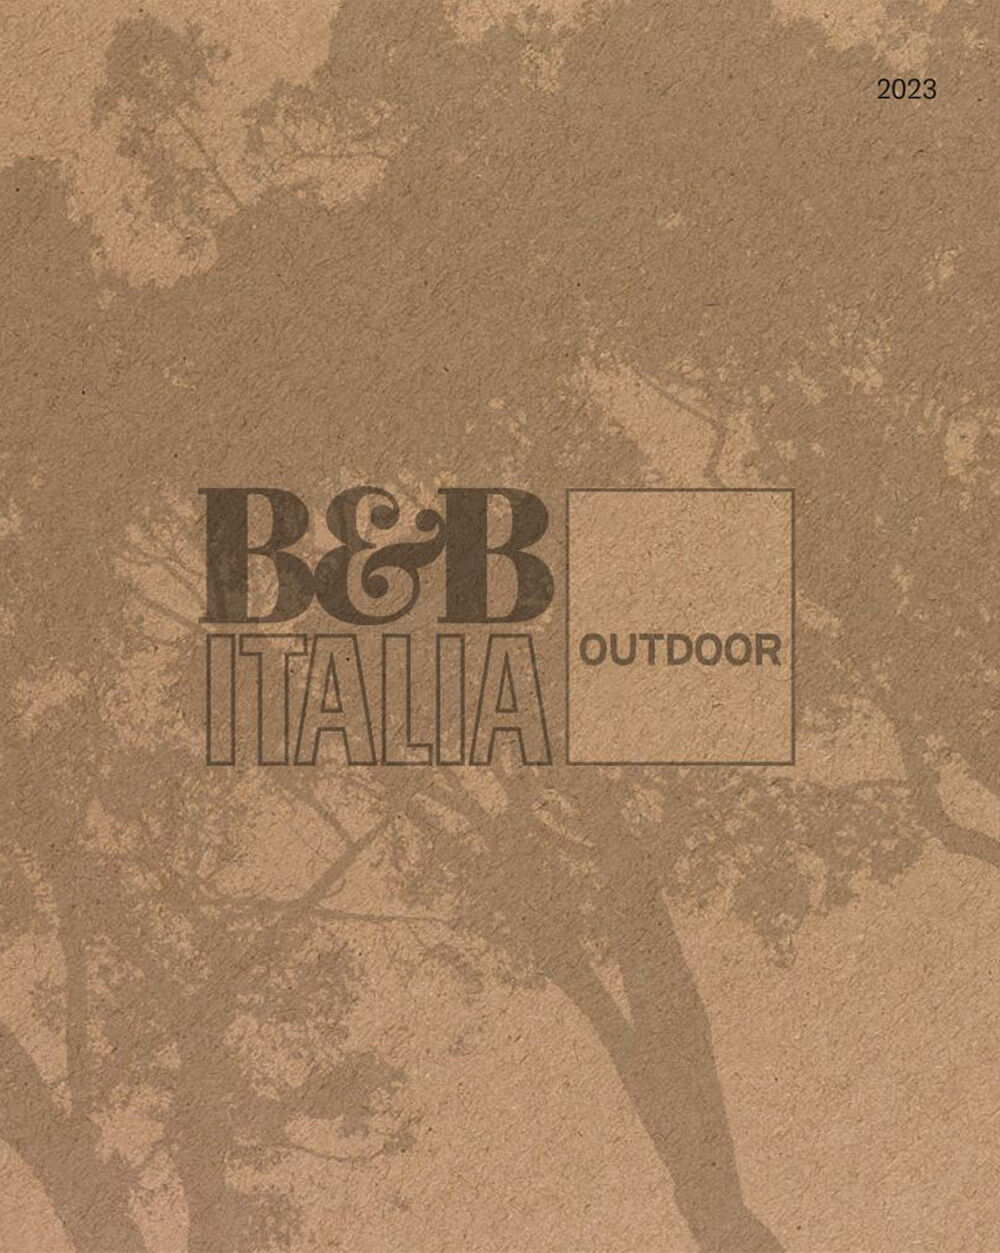 B&B Italia - Outdoor Magazine 2023. Magazine of B&B Italia's Stylish Outdoor Accommodations and Furnishings.